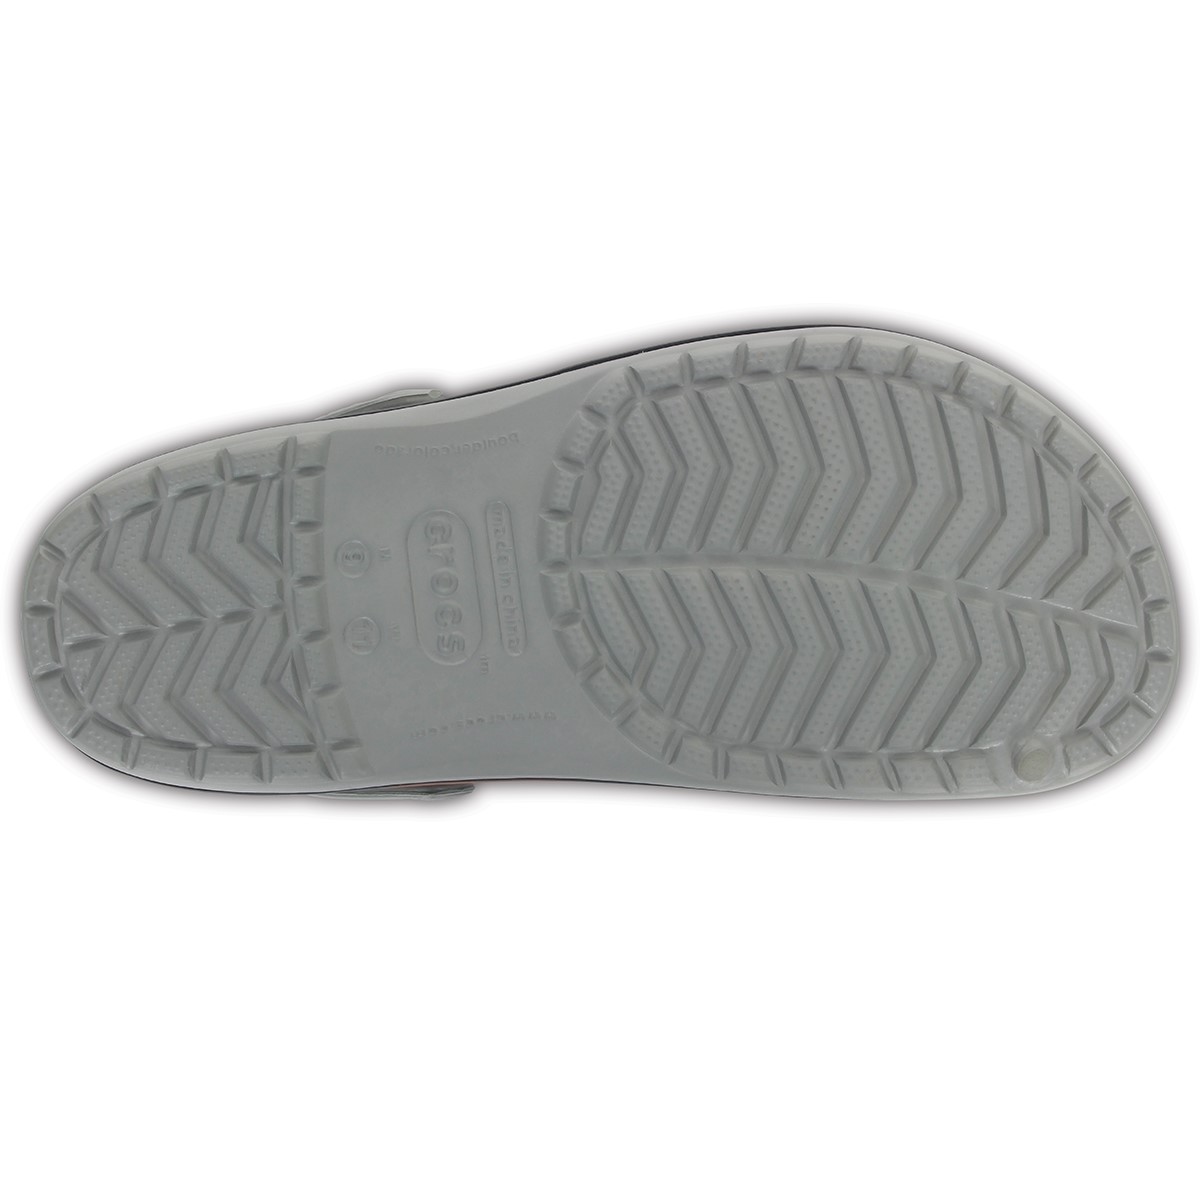 Crocs Unisex Sandalet 11016 Light Grey/Navy